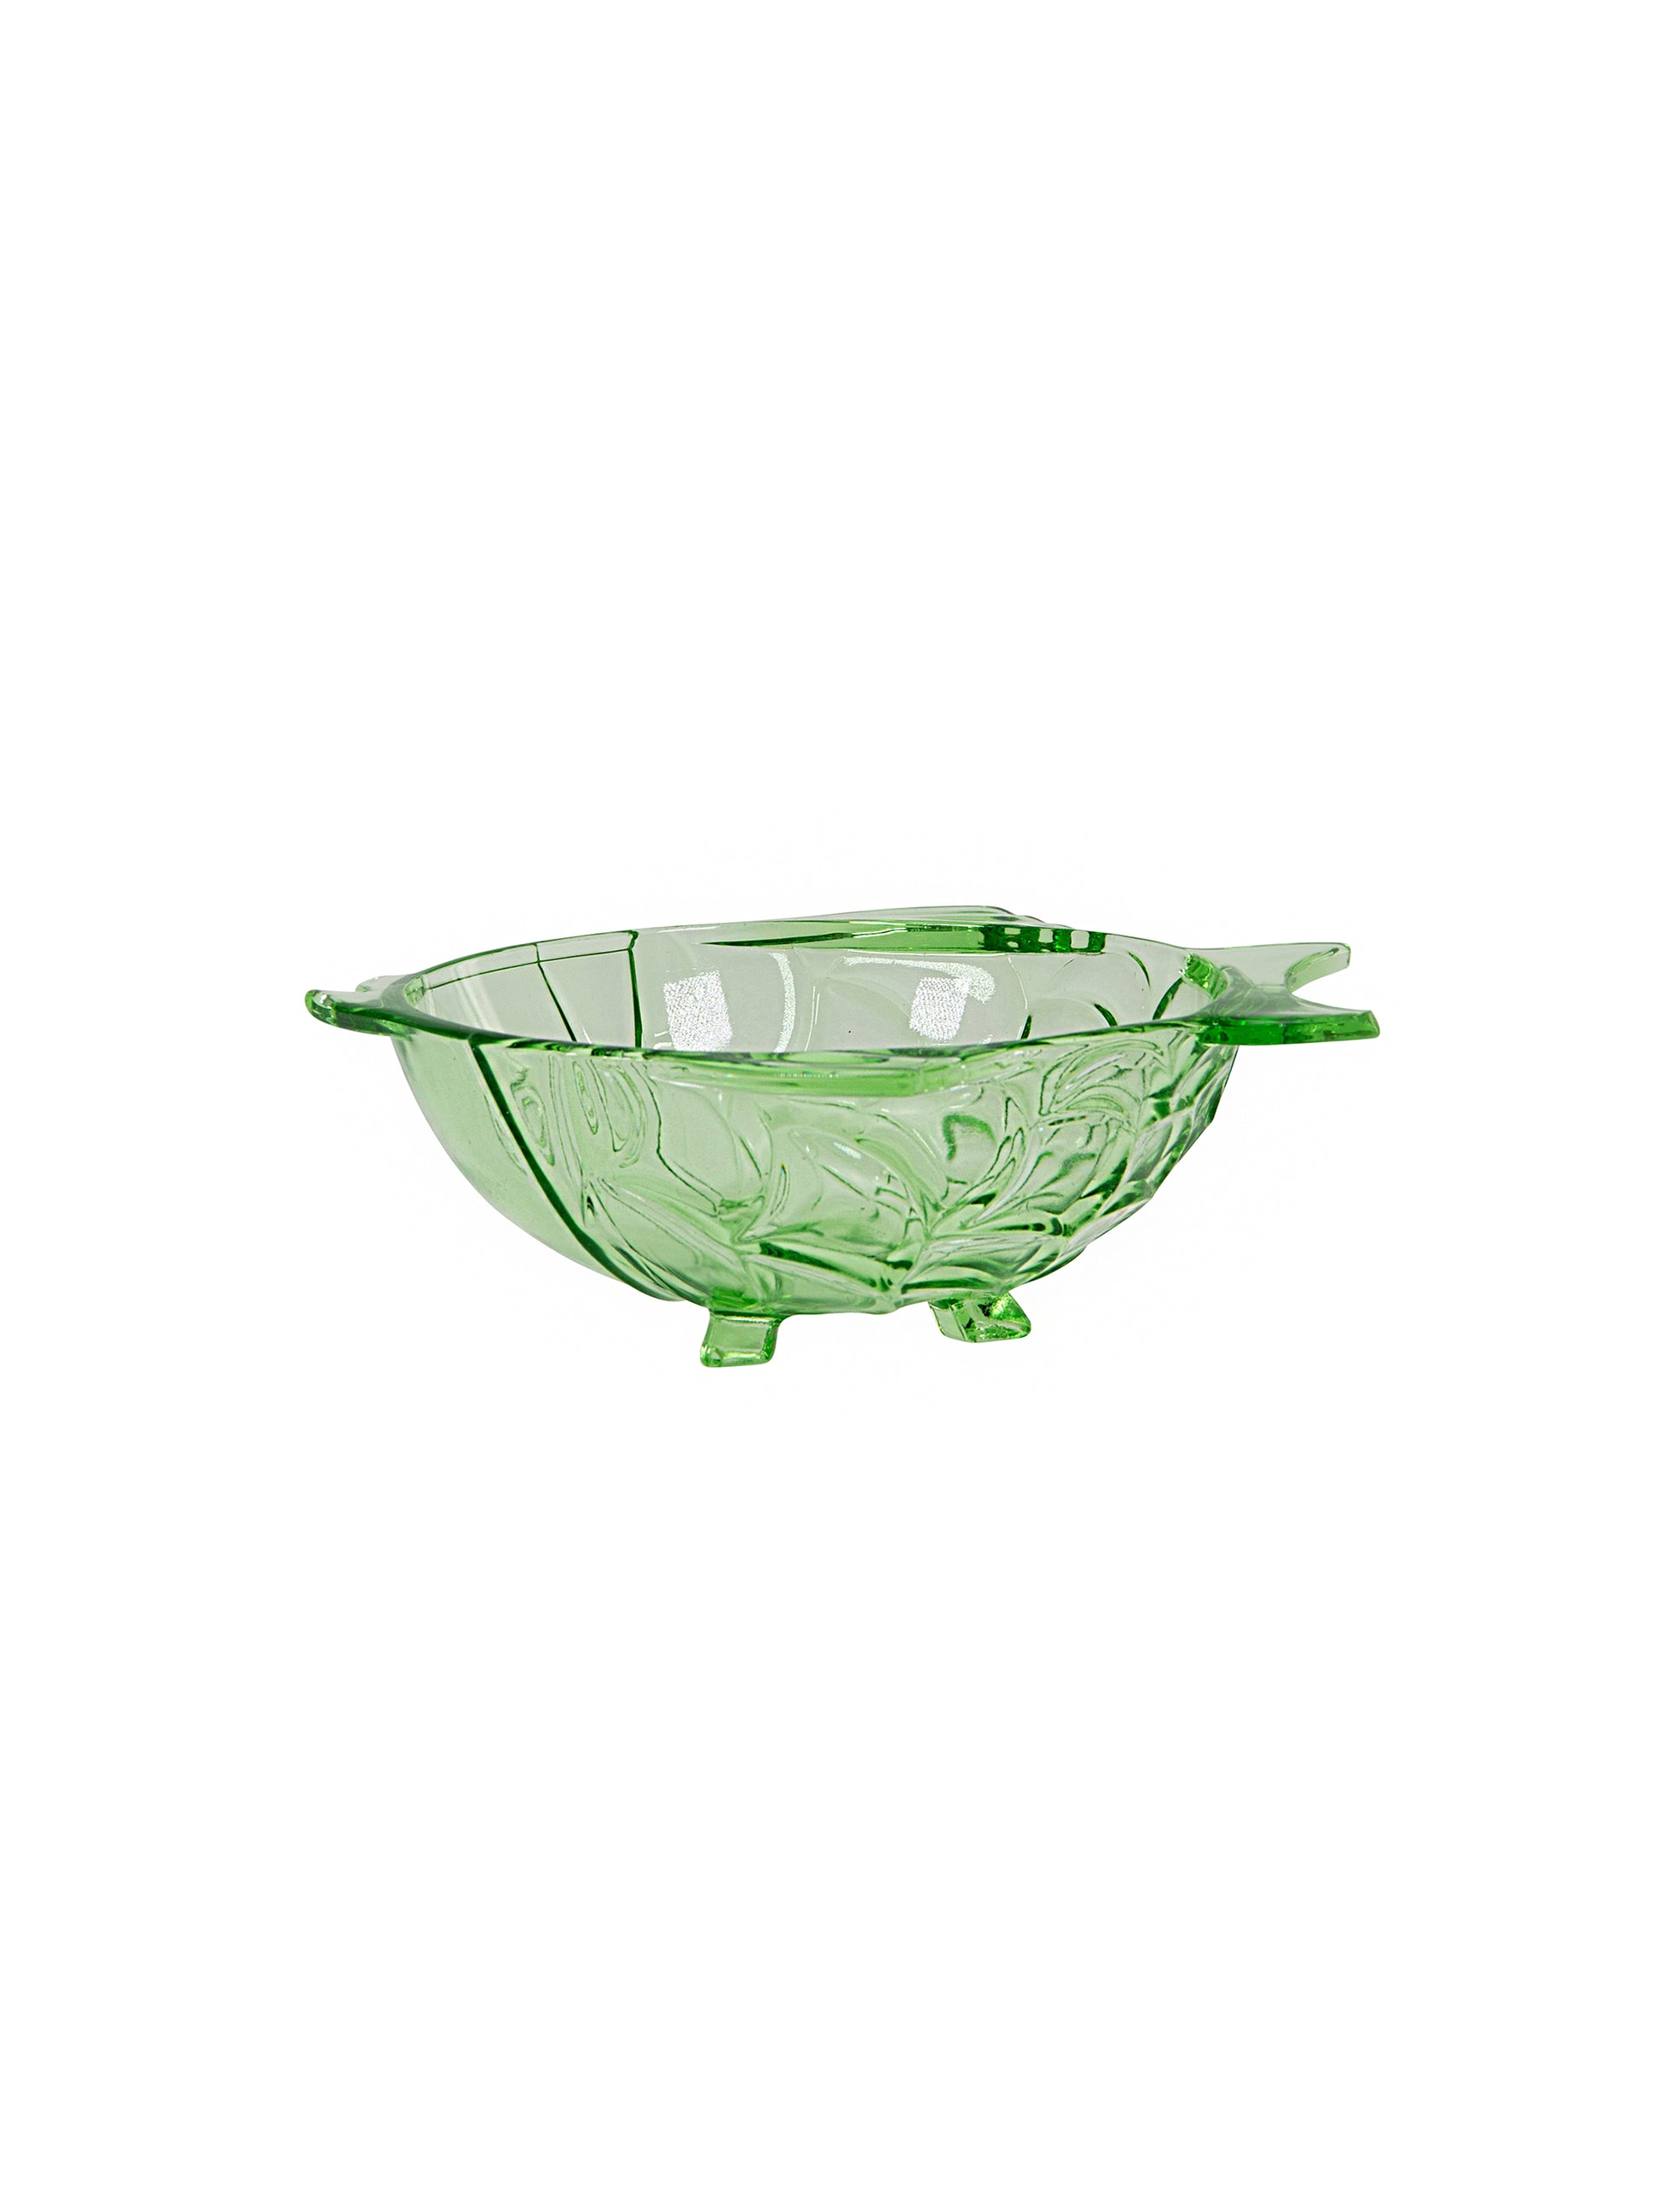 Shop the Vintage 1950s Green Glass Fish Bowl Set. at Weston Table